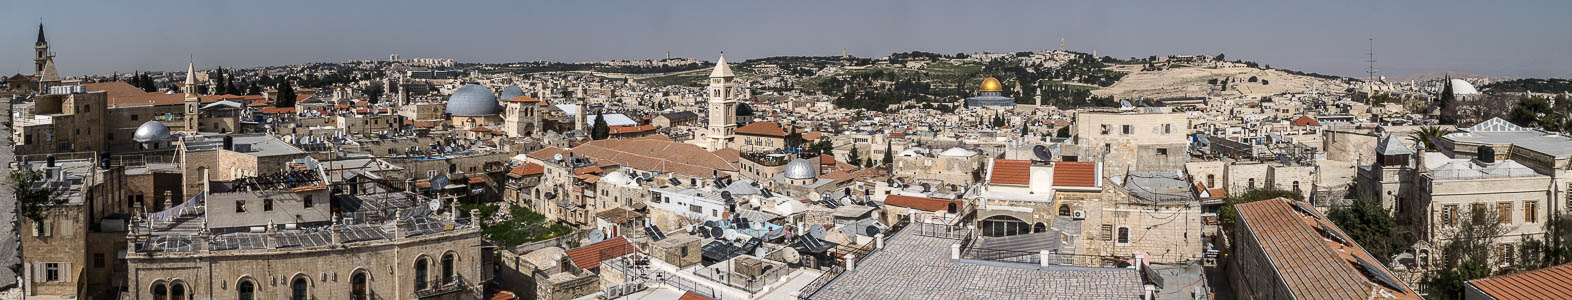 Jerusalem Blick von der Davidszitadelle: Altstadt